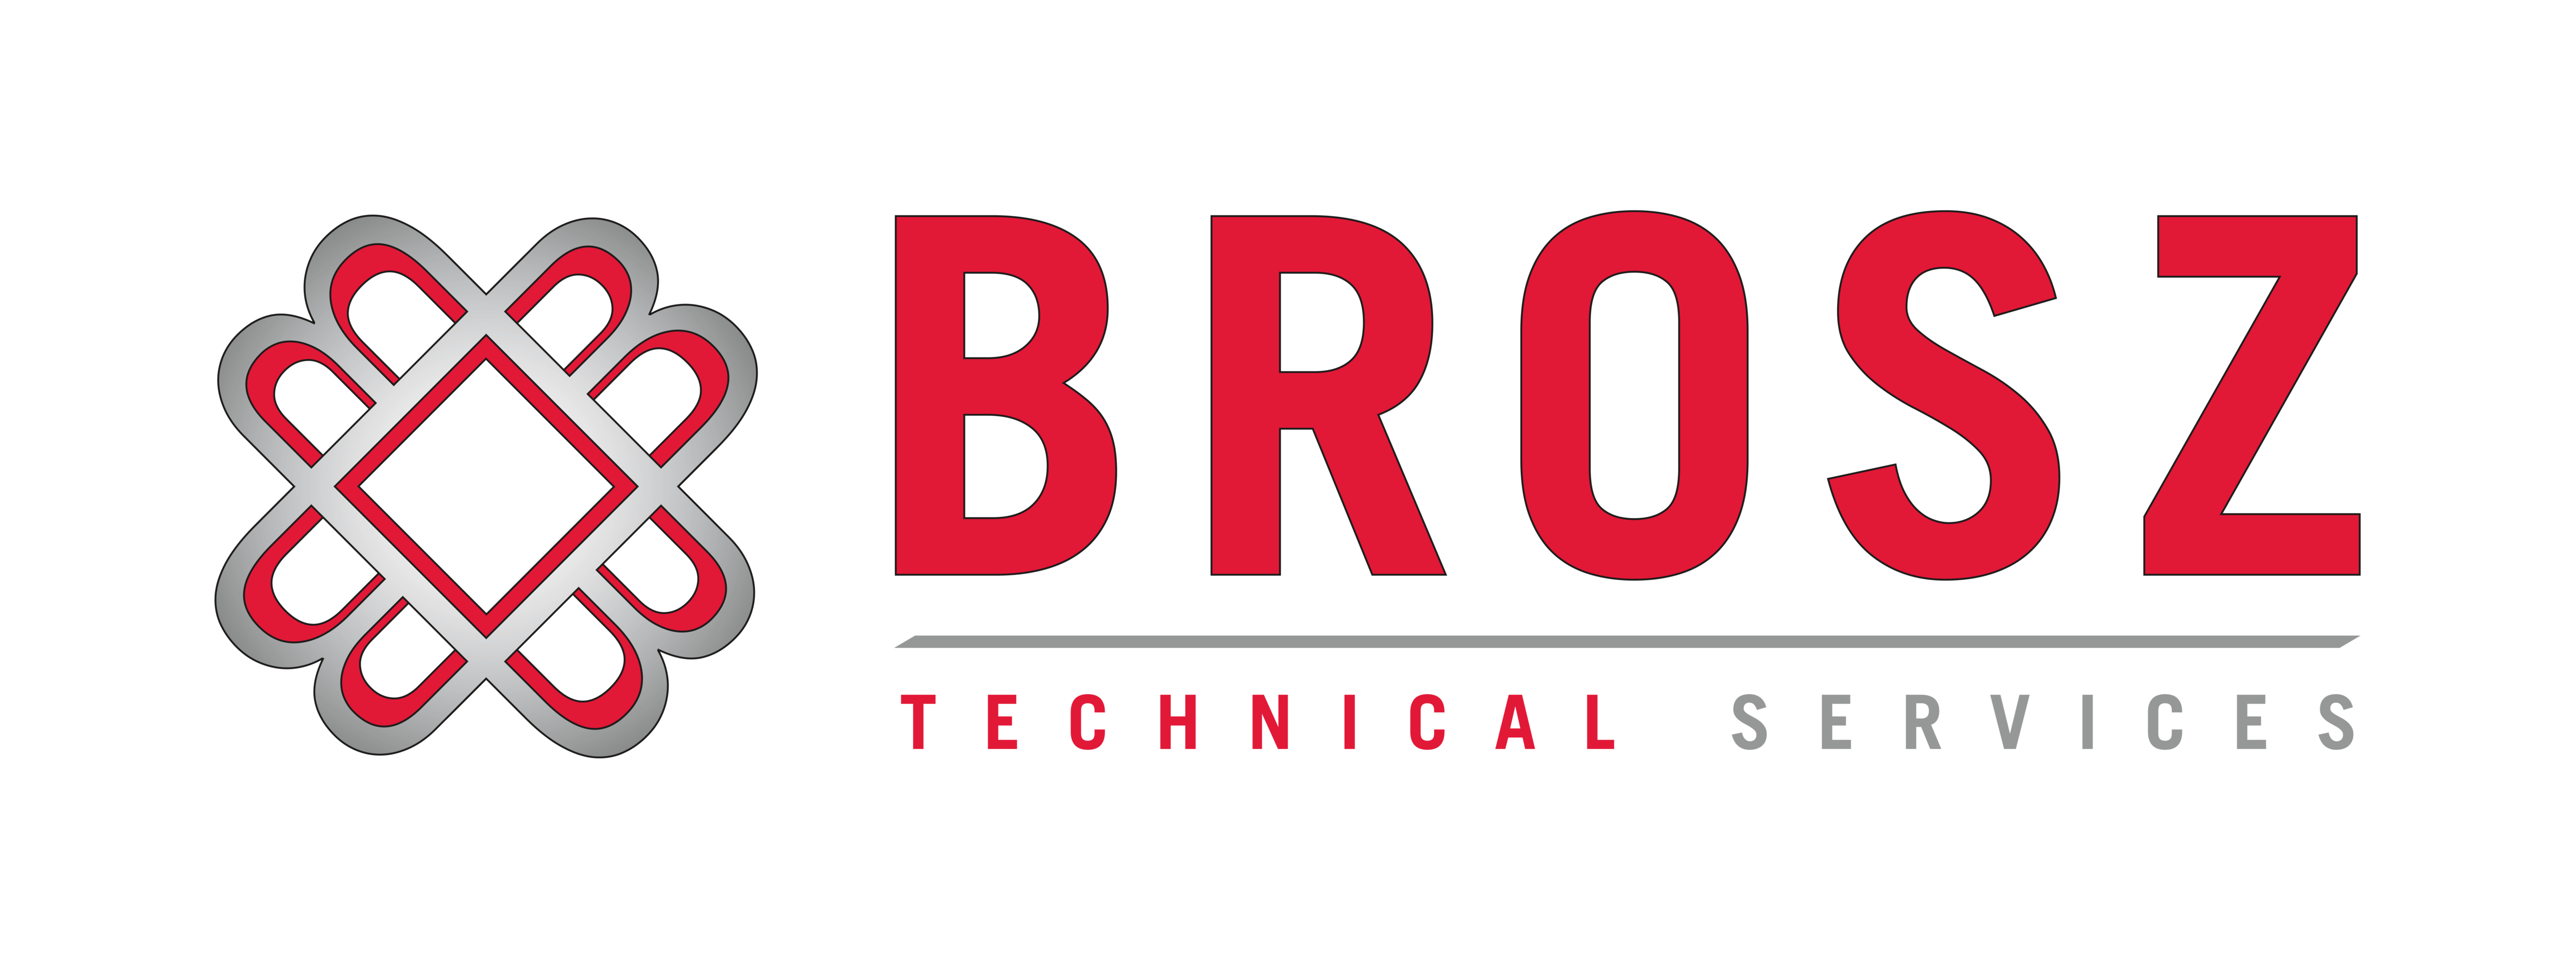 Brosz Technical Services